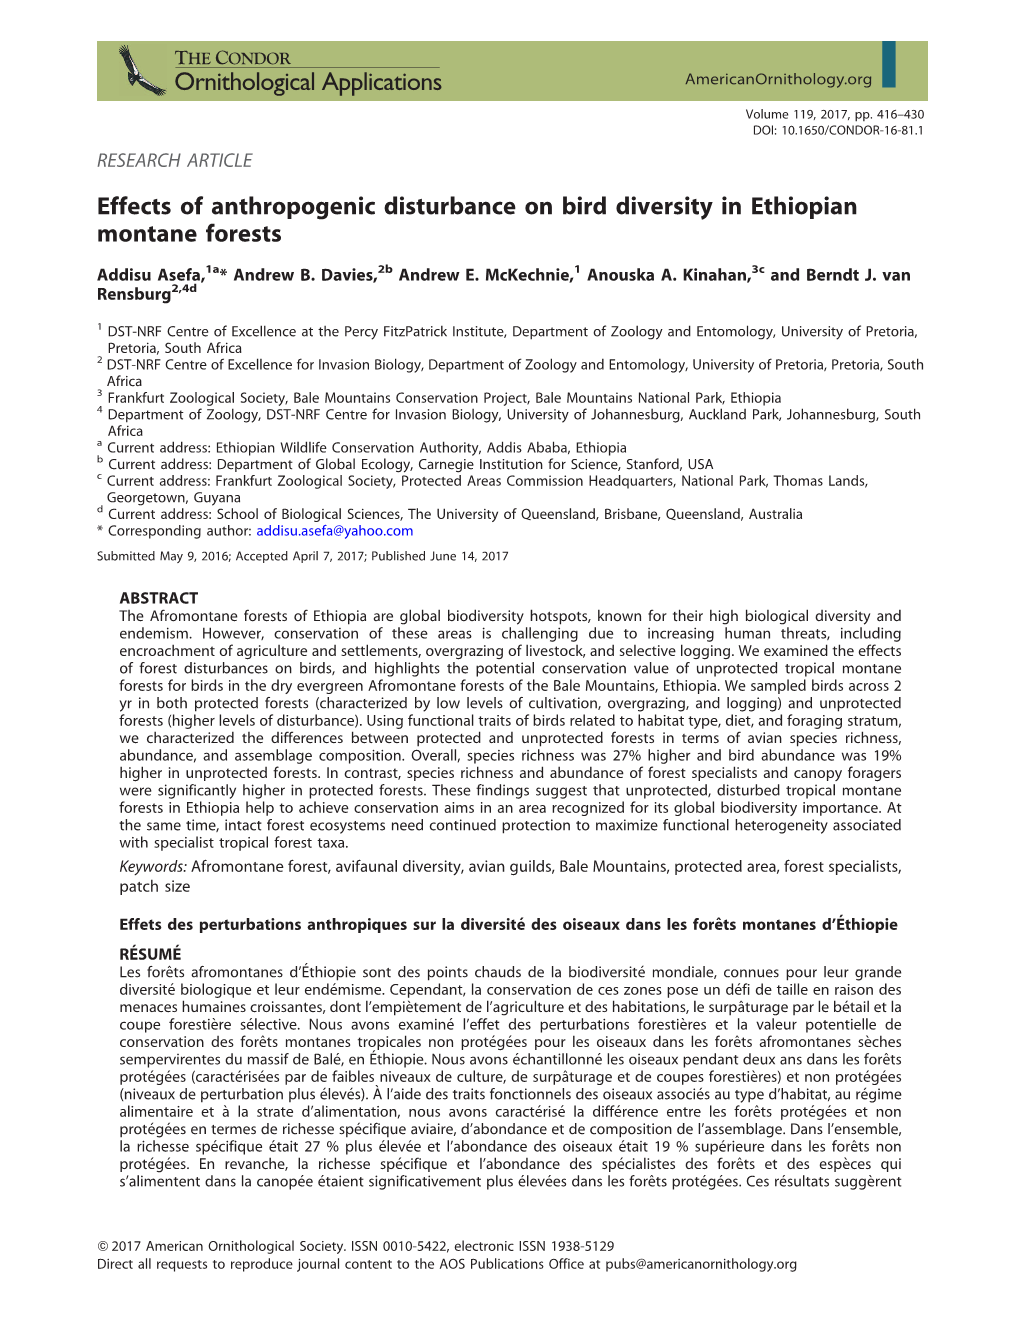 Effects of Anthropogenic Disturbance on Bird Diversity in Ethiopian Montane Forests